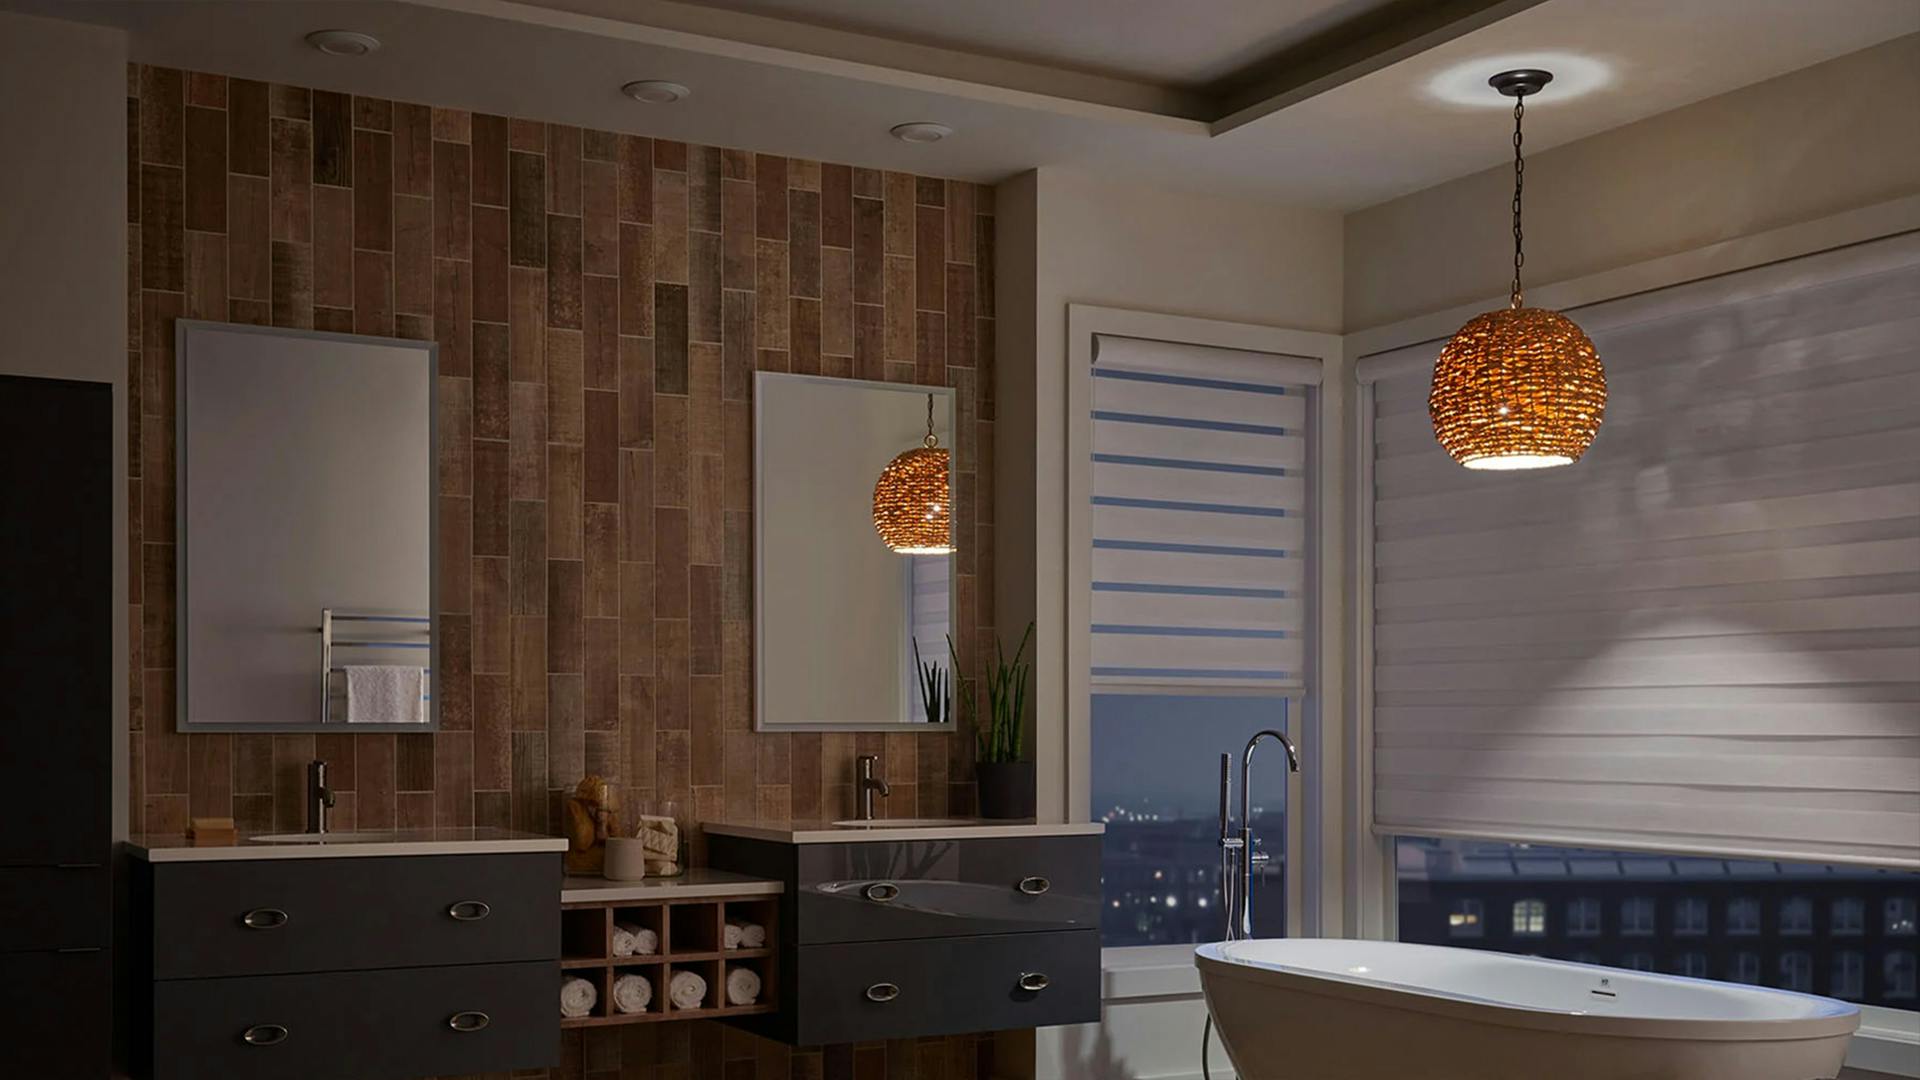 Bathroom illuminated by a Palisades pendant light above the bathtub